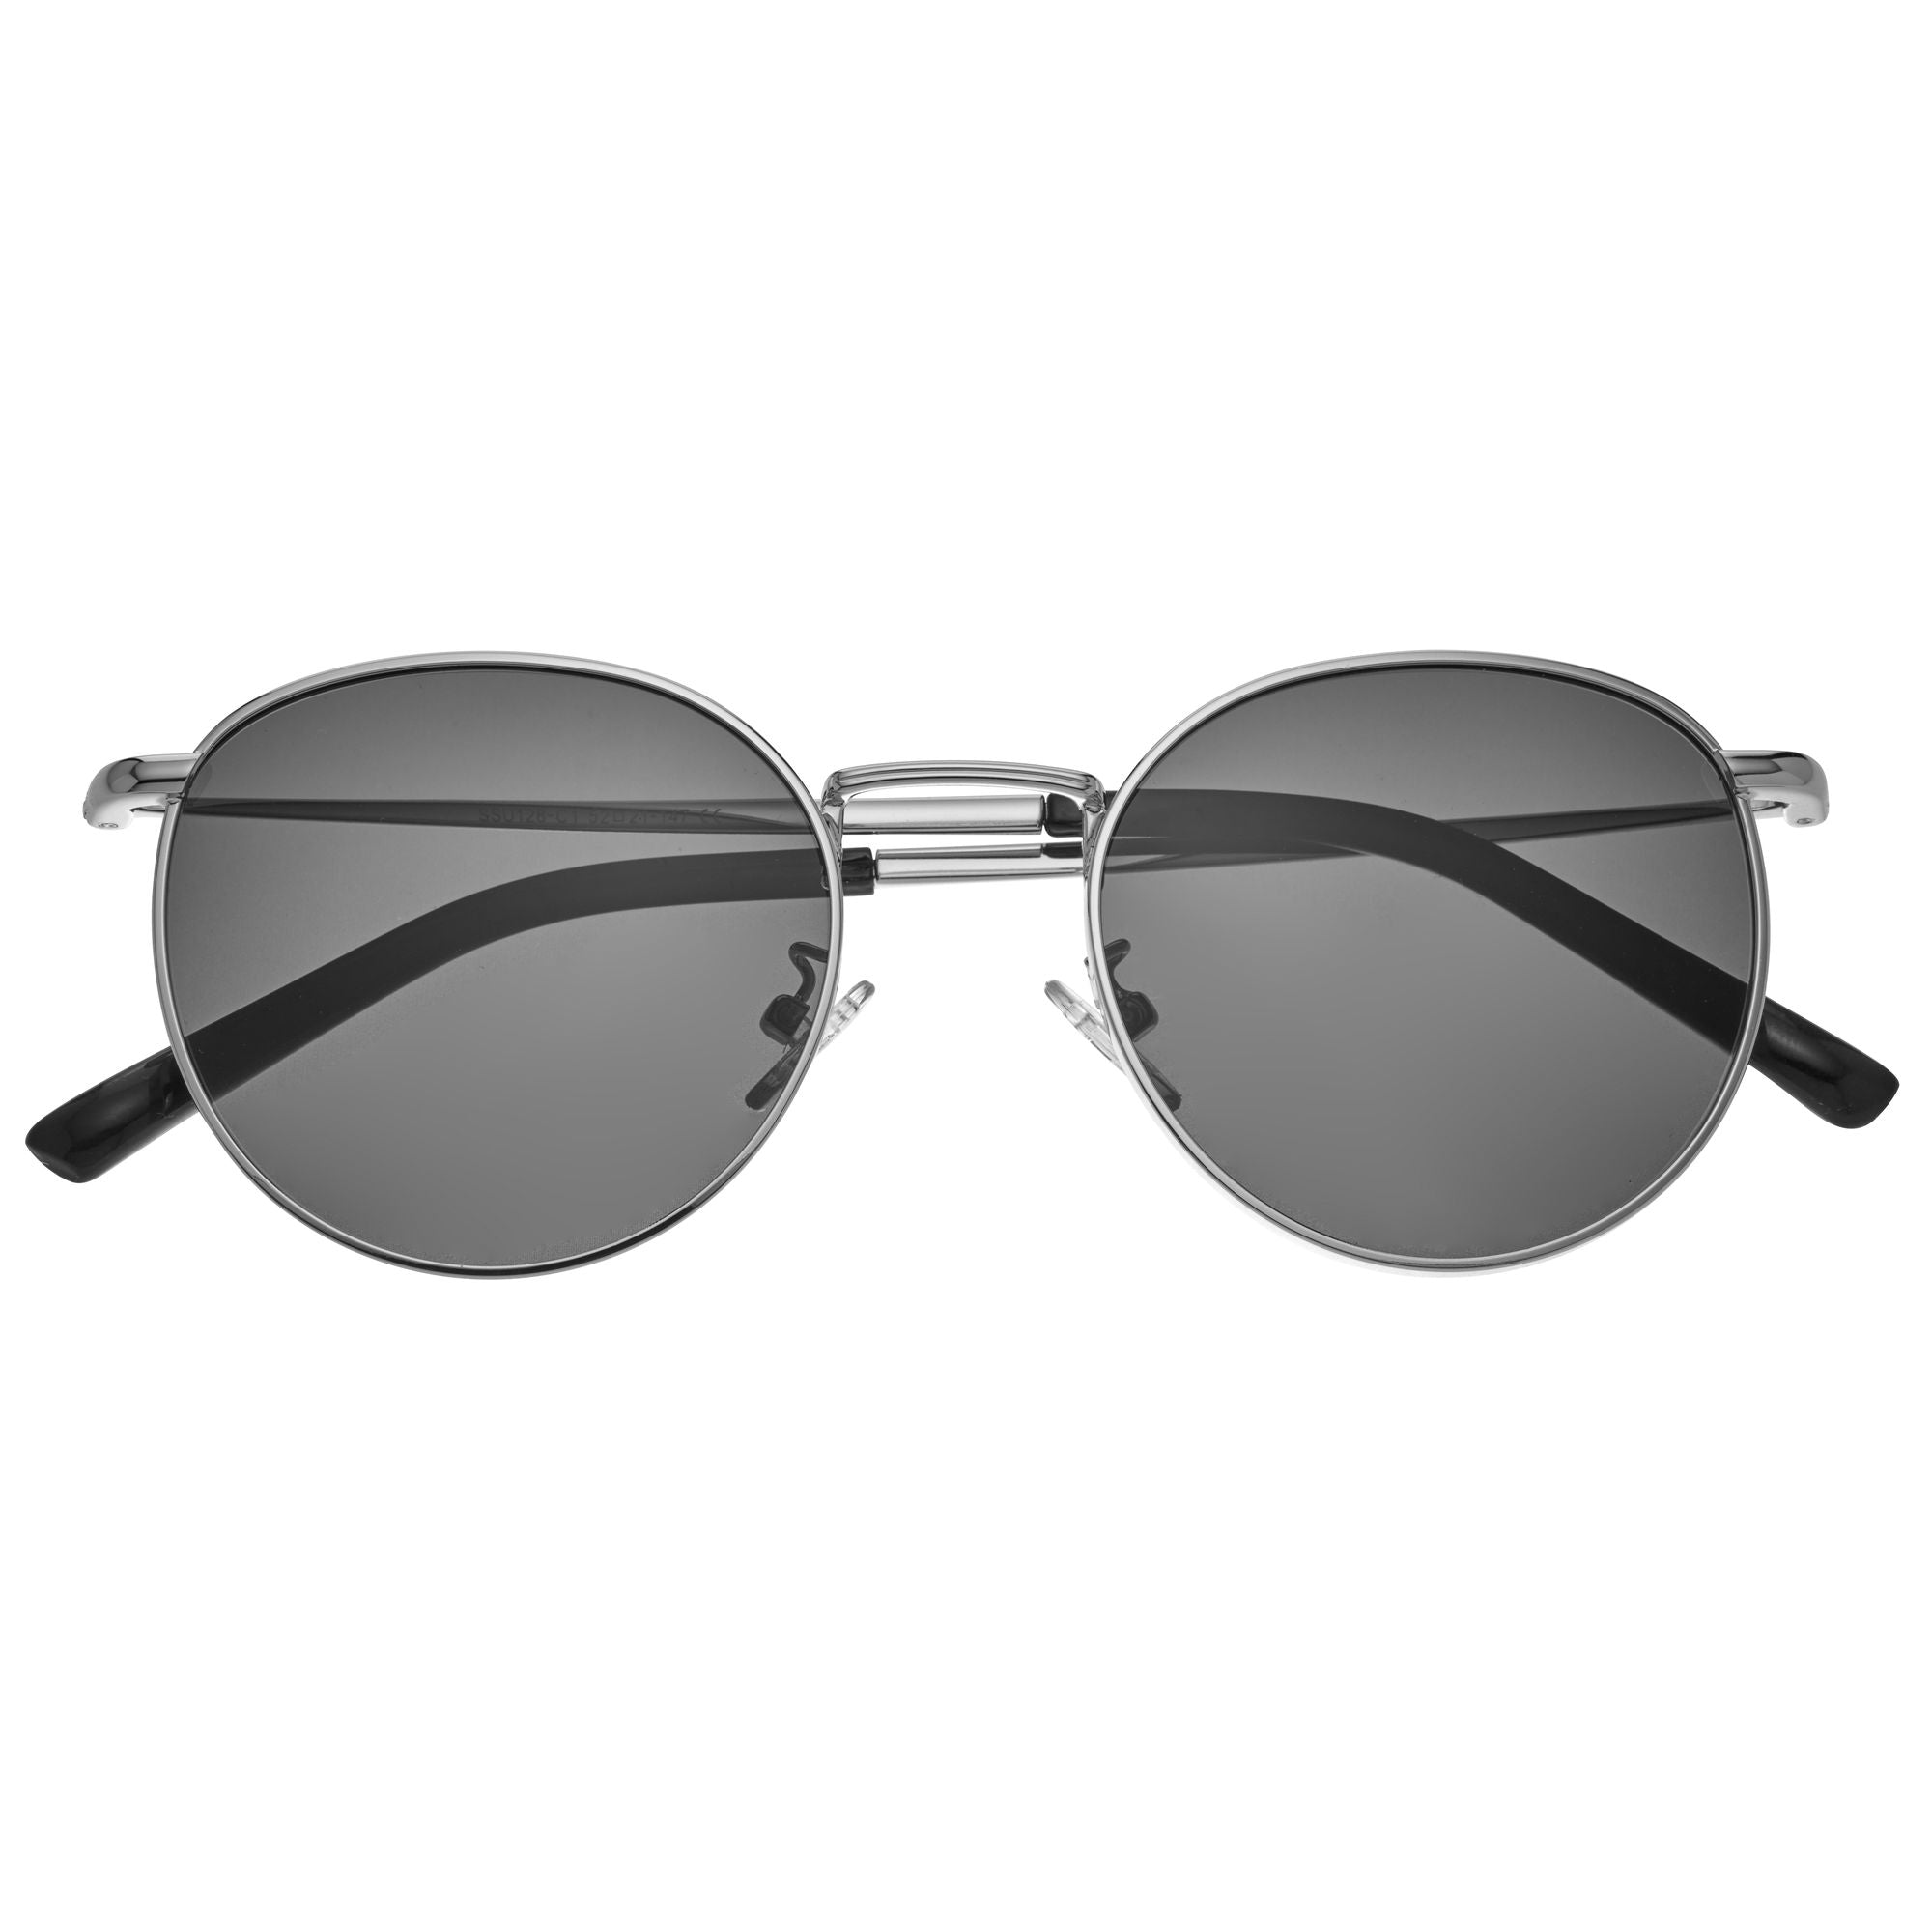 Simplify Dade Polarized Sunglasses - Silver/Silver - SSU128-C3